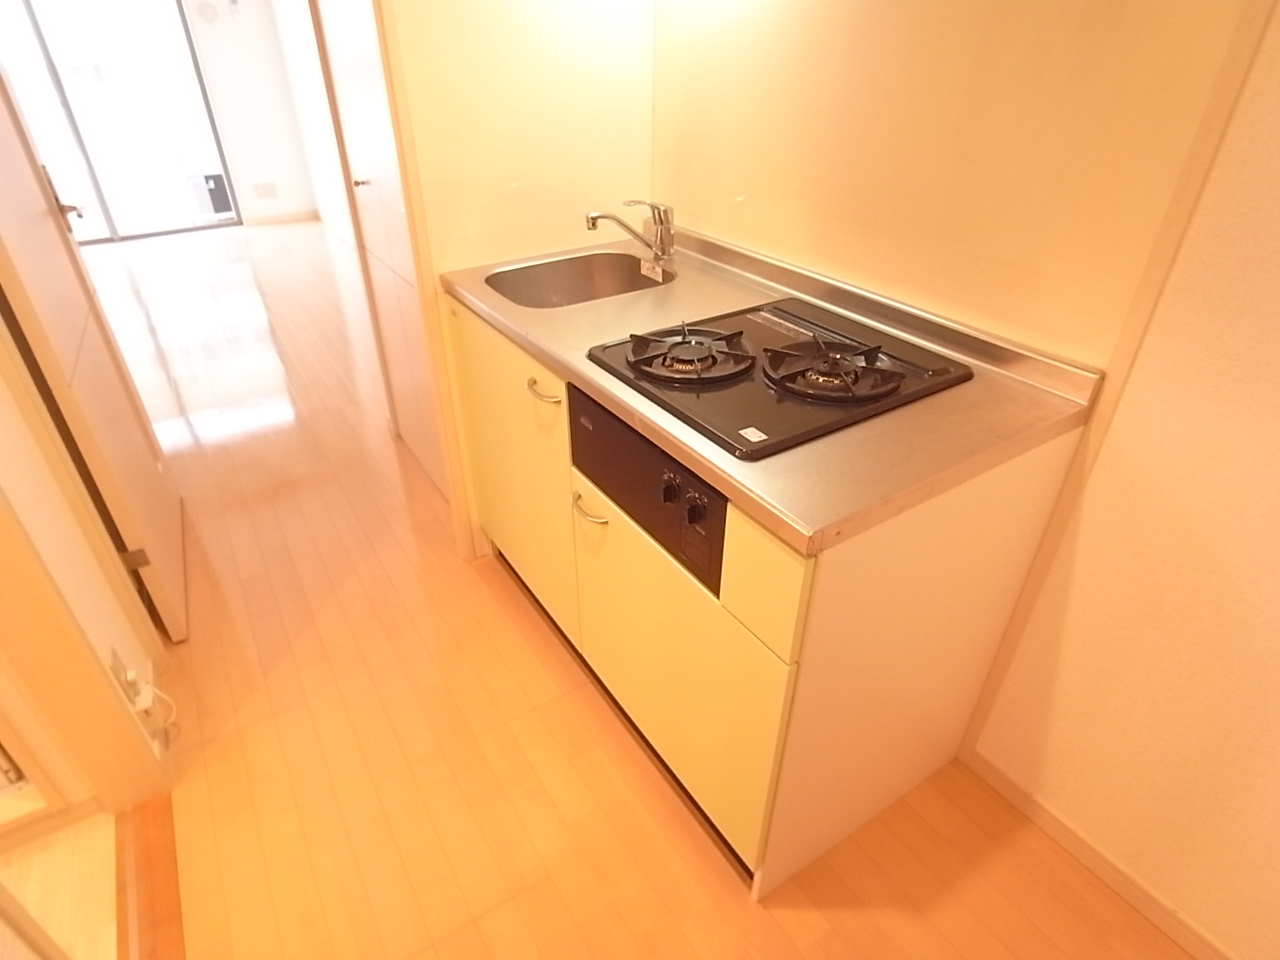 Kitchen. Two-burner stove in the kitchen ☆